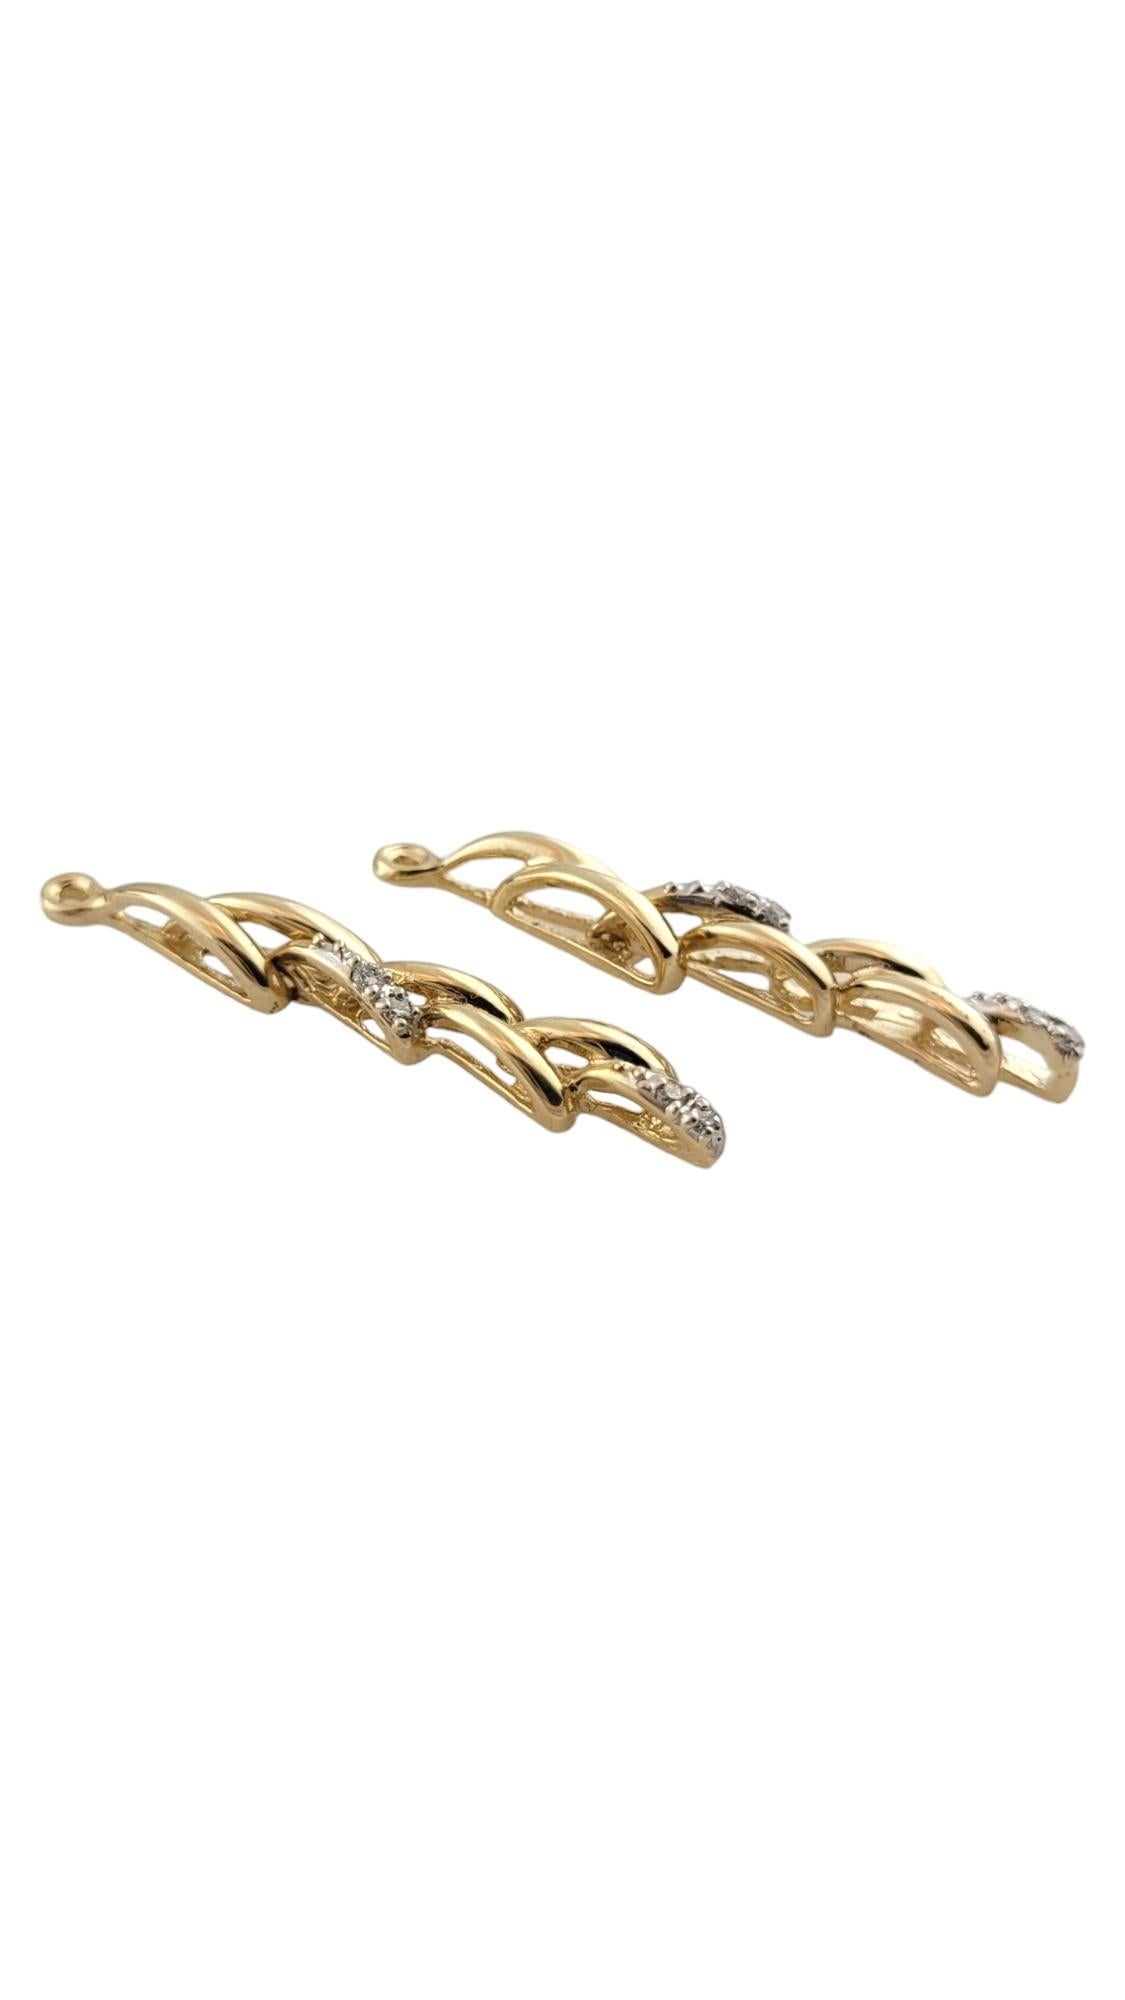 Brilliant Cut 14K Yellow Gold Diamond Earring Enhancers #16252 For Sale